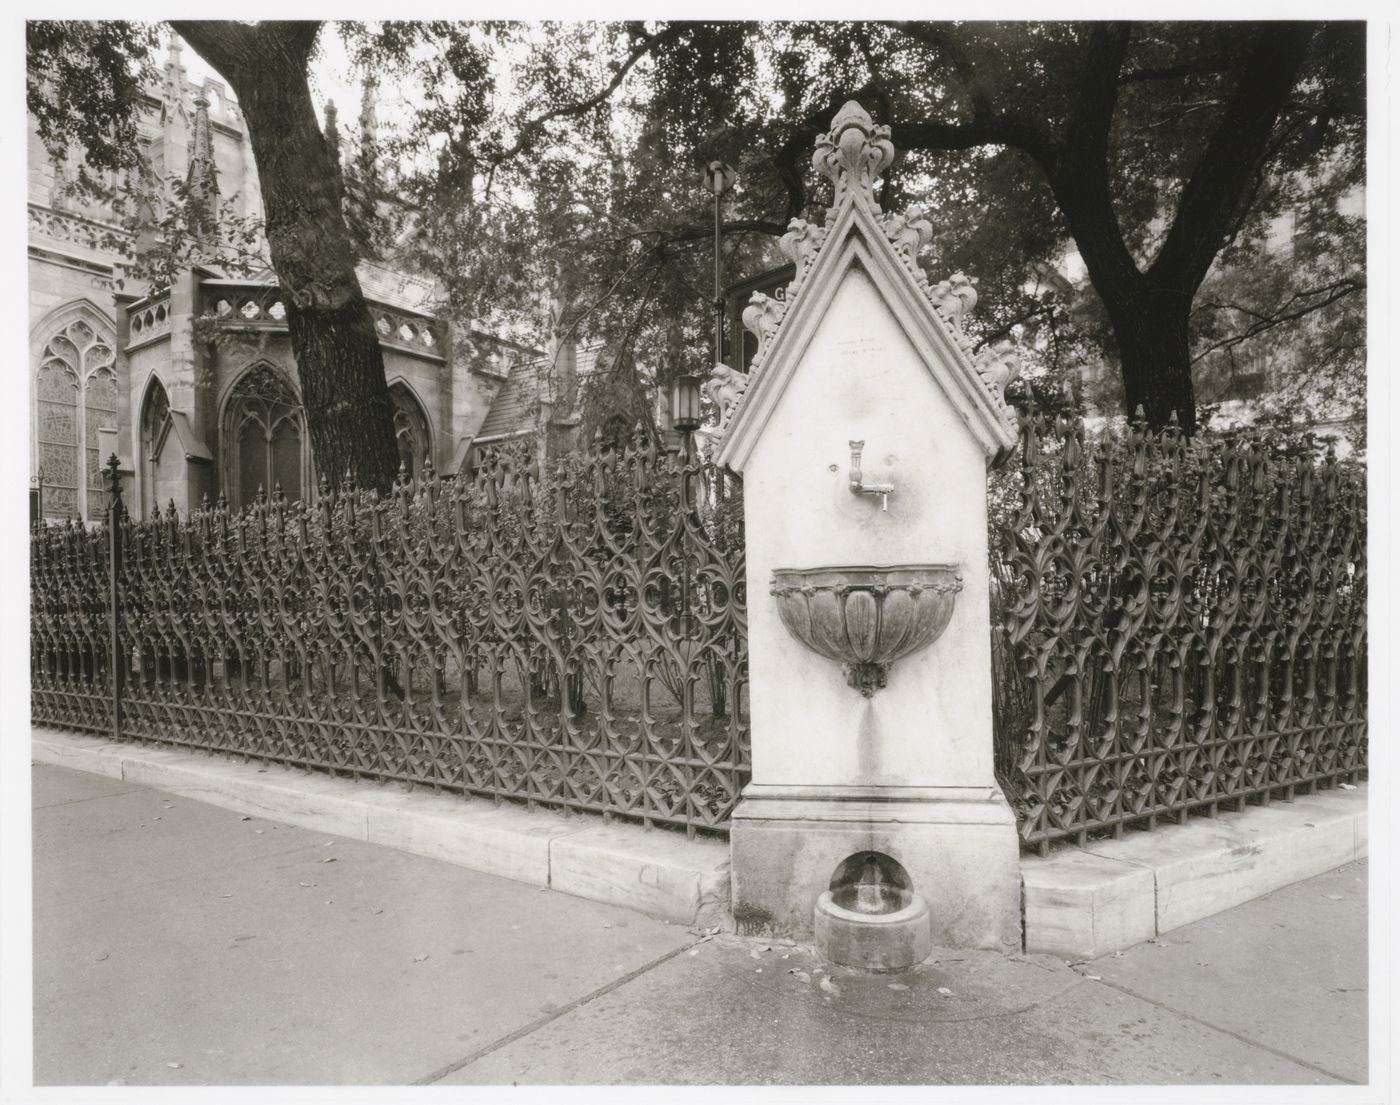 Gracechurch, drinking fountain at corner of churchyard, New York City, New York